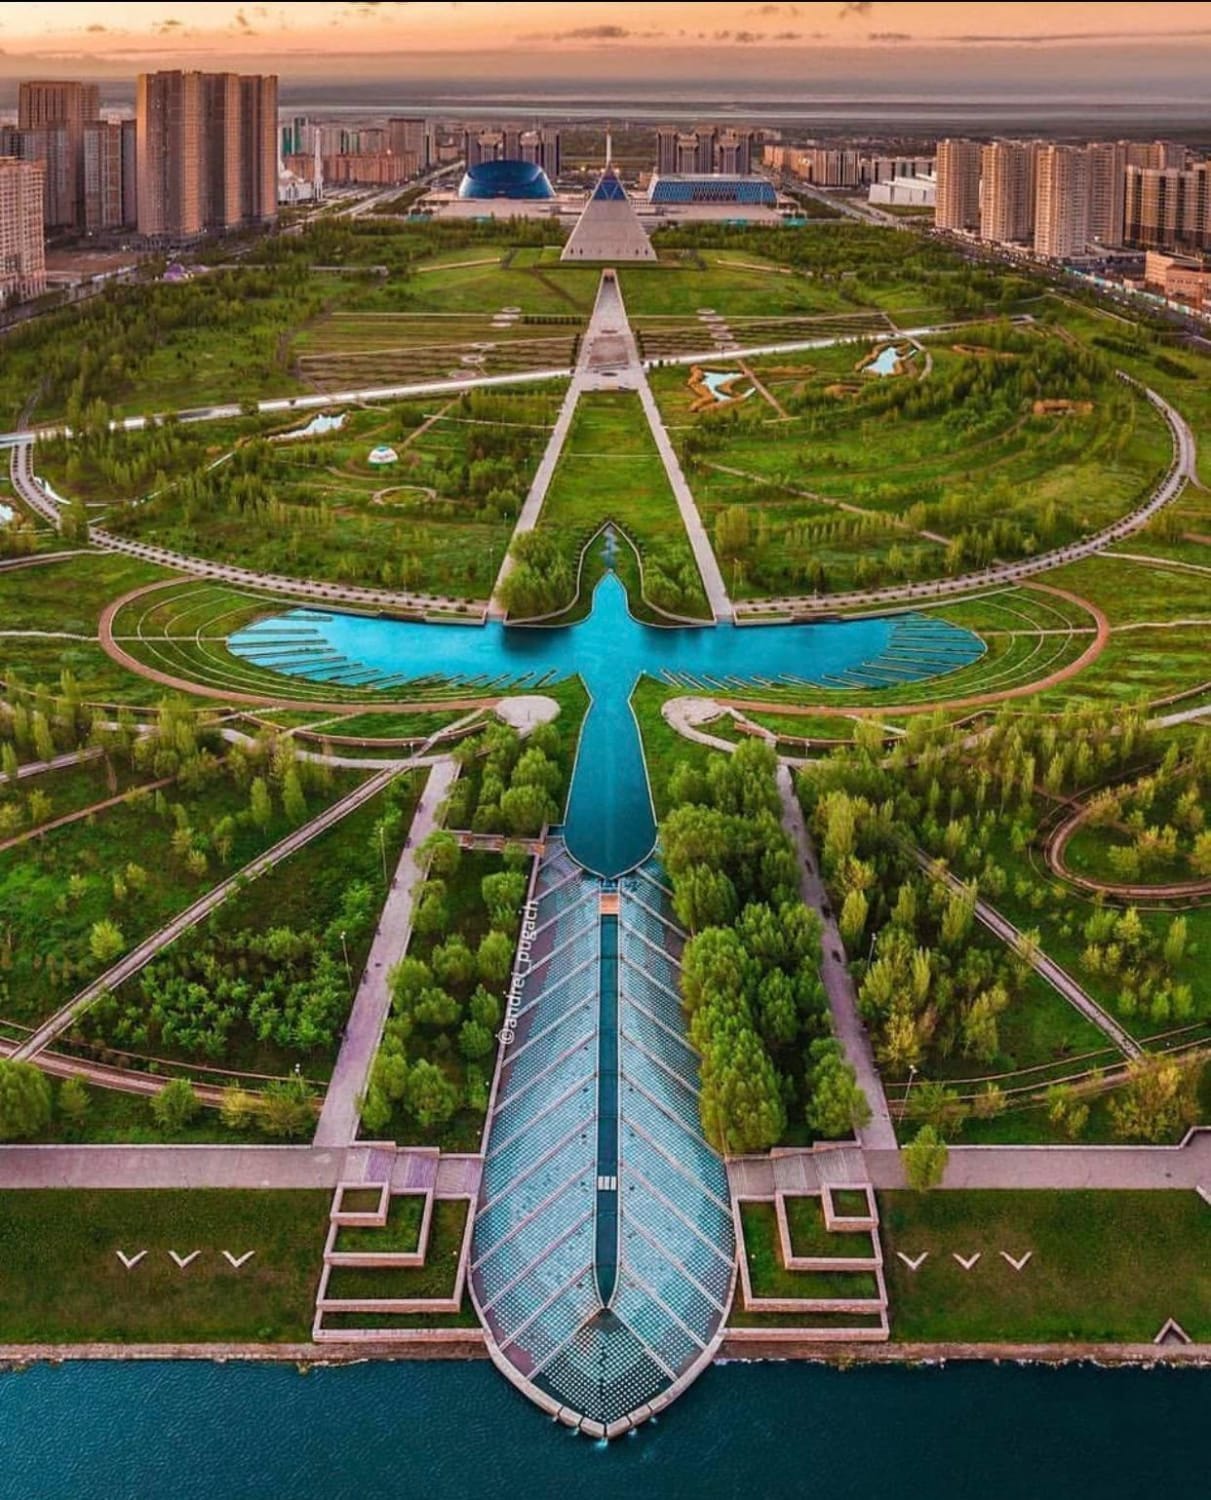 Astana, the capital of kazakhstan